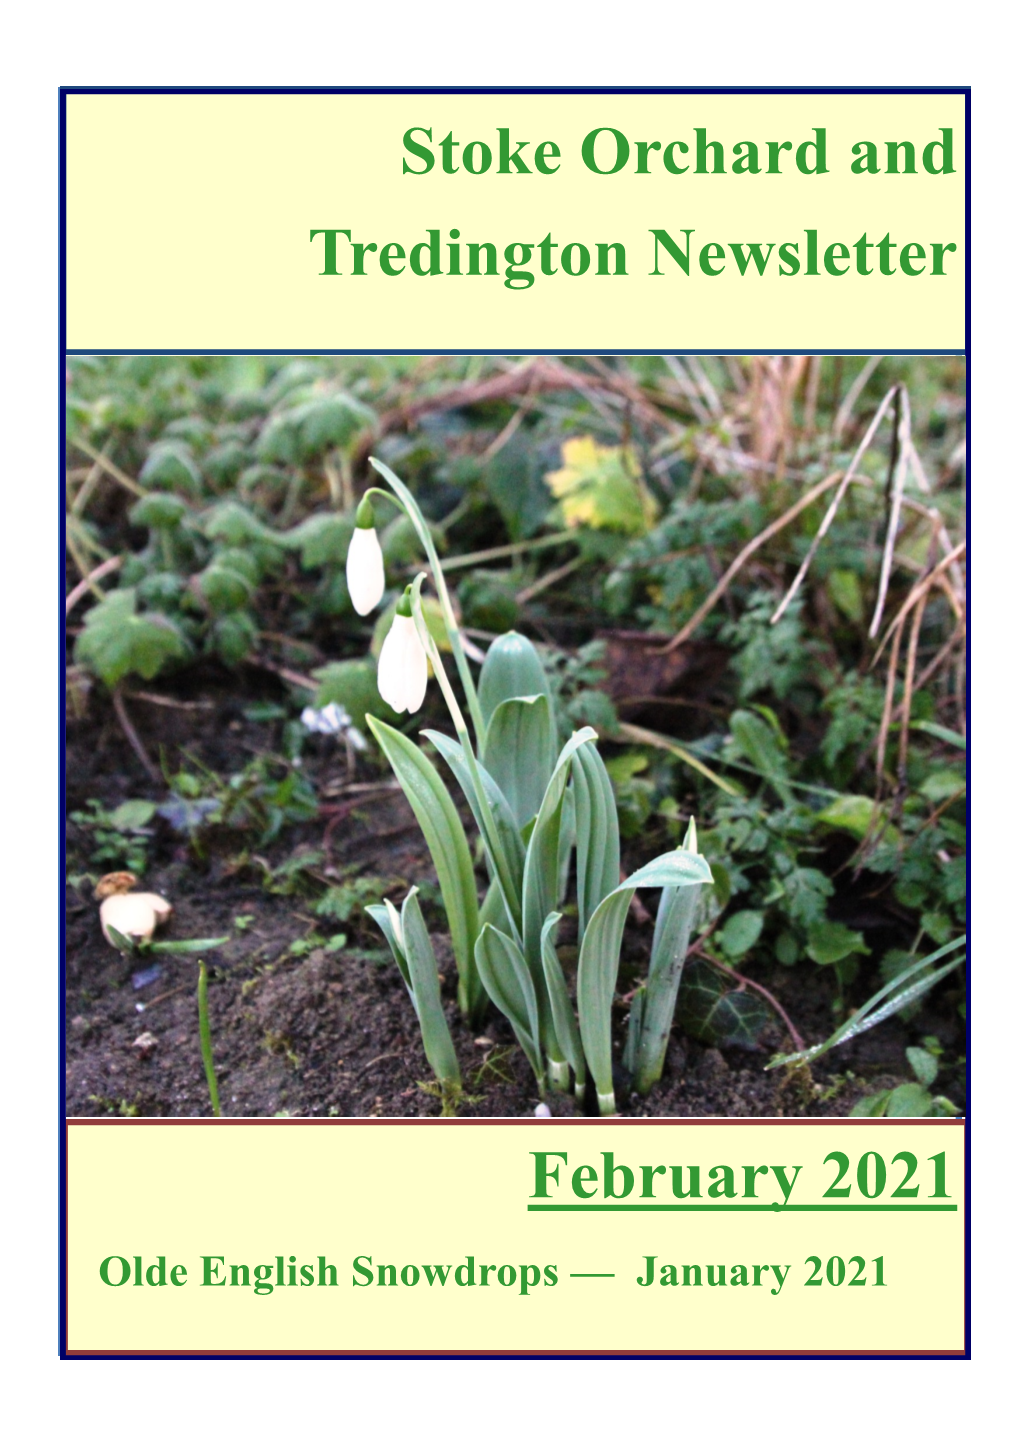 Stoke Orchard and Tredington Newsletter February 2021